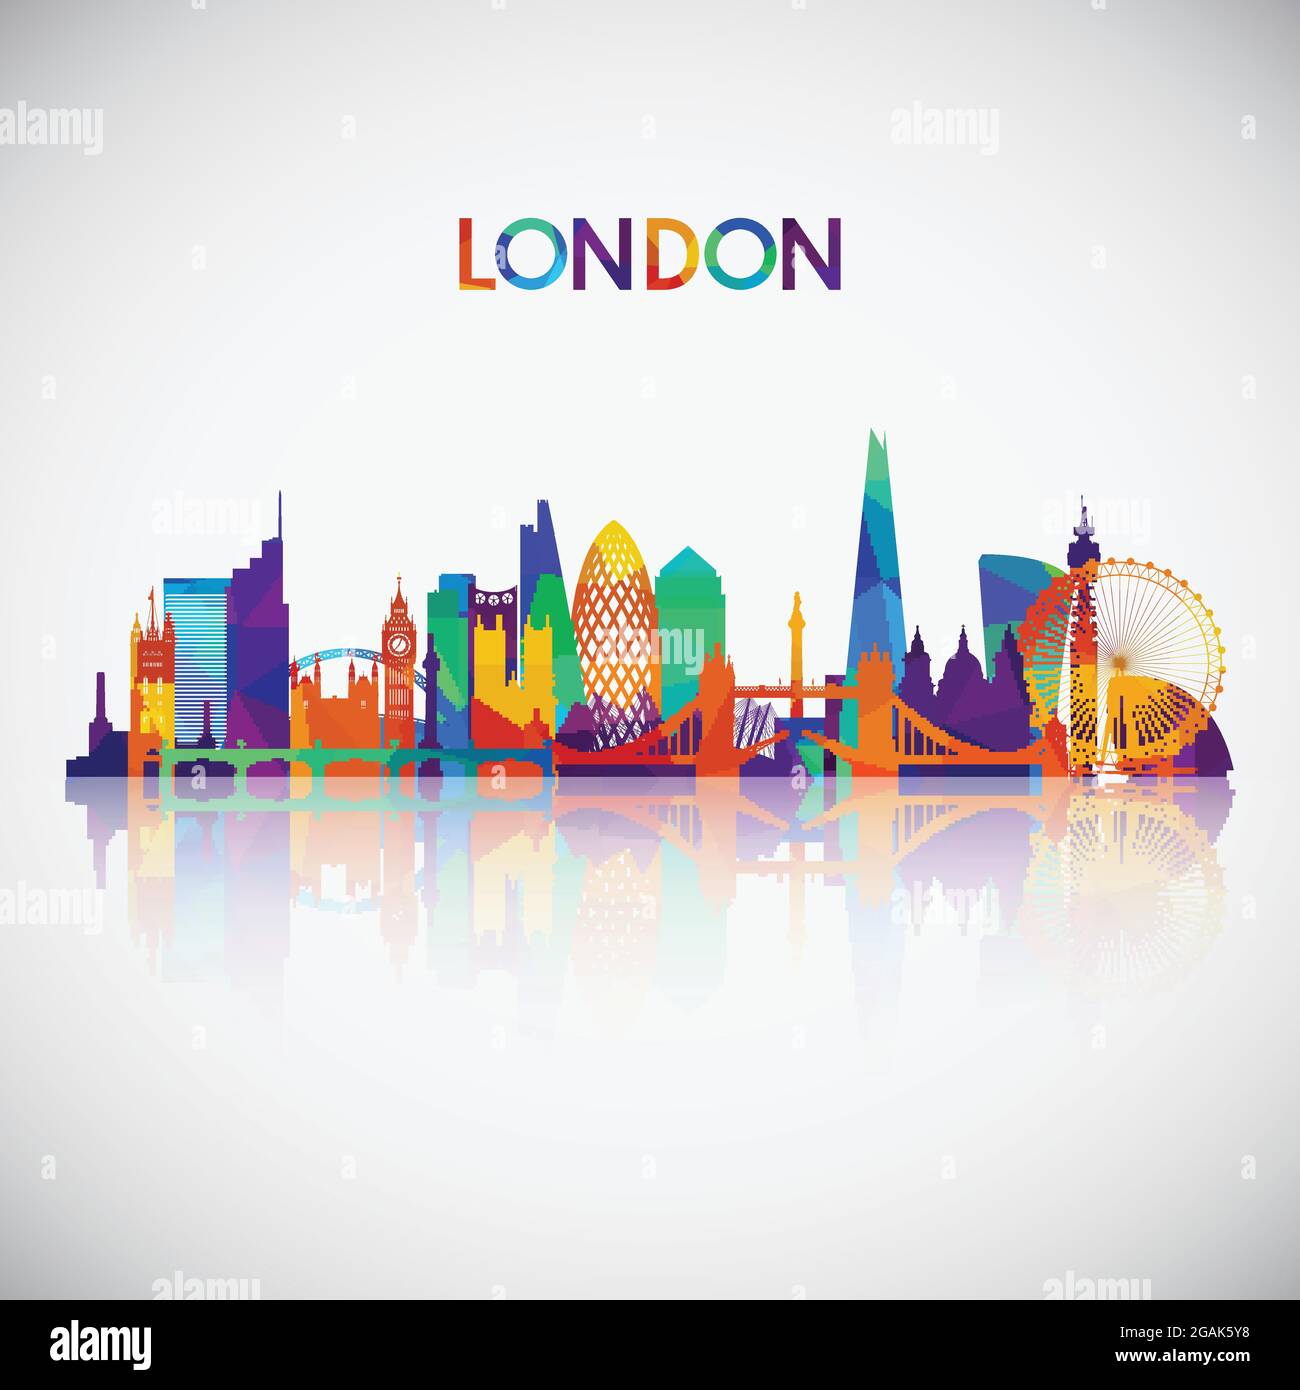 London Skyline Drawing